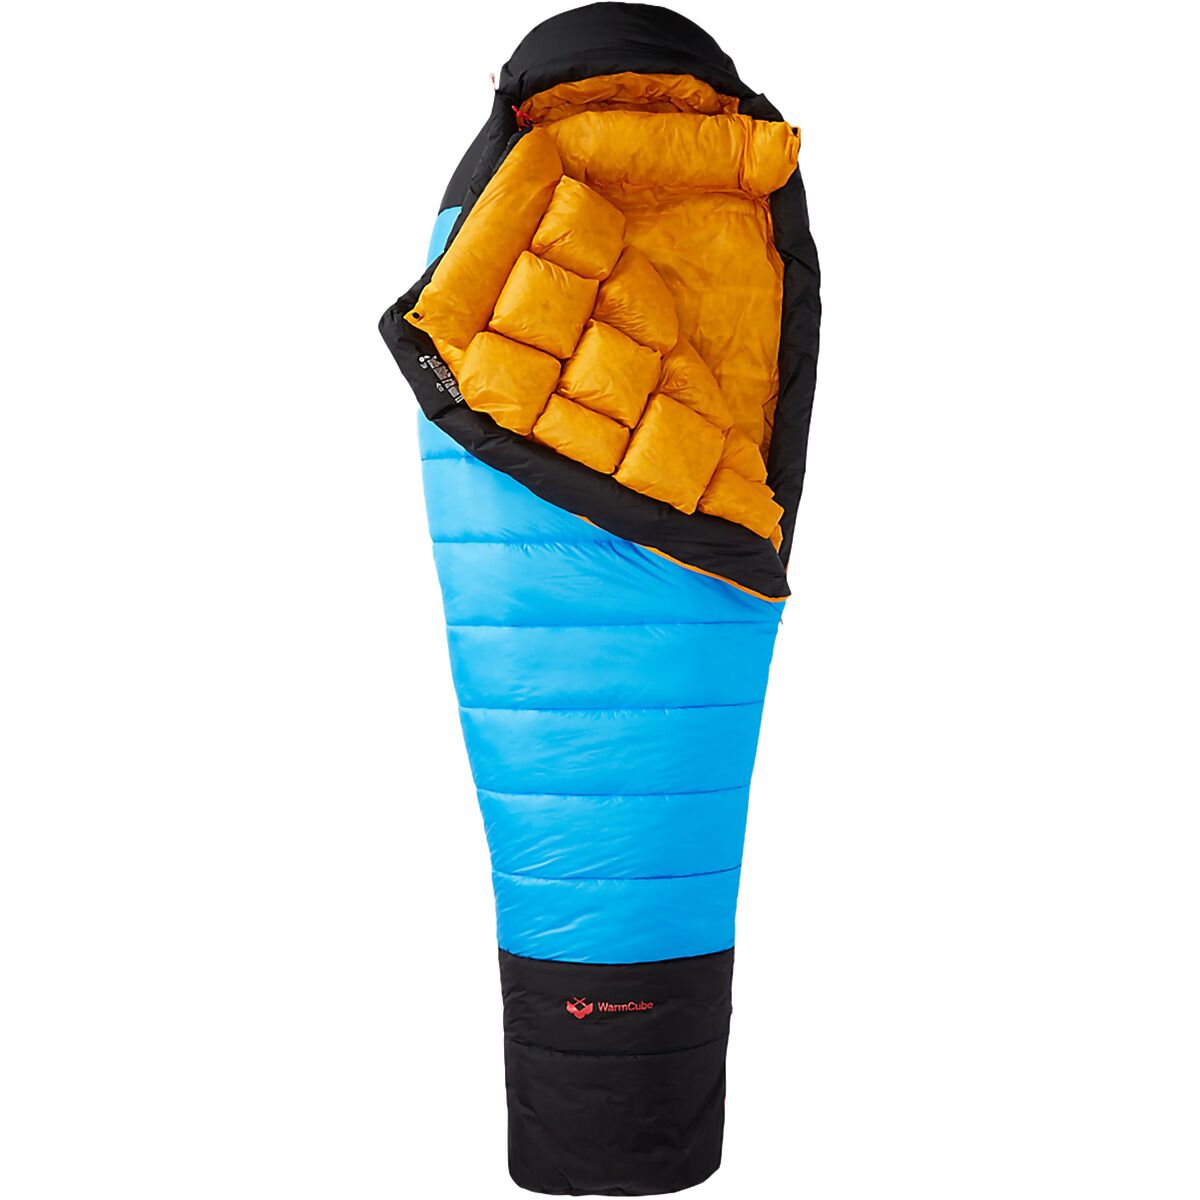 Marmot Warmcube Expedition Sleeping Bag: -30F Synthetic